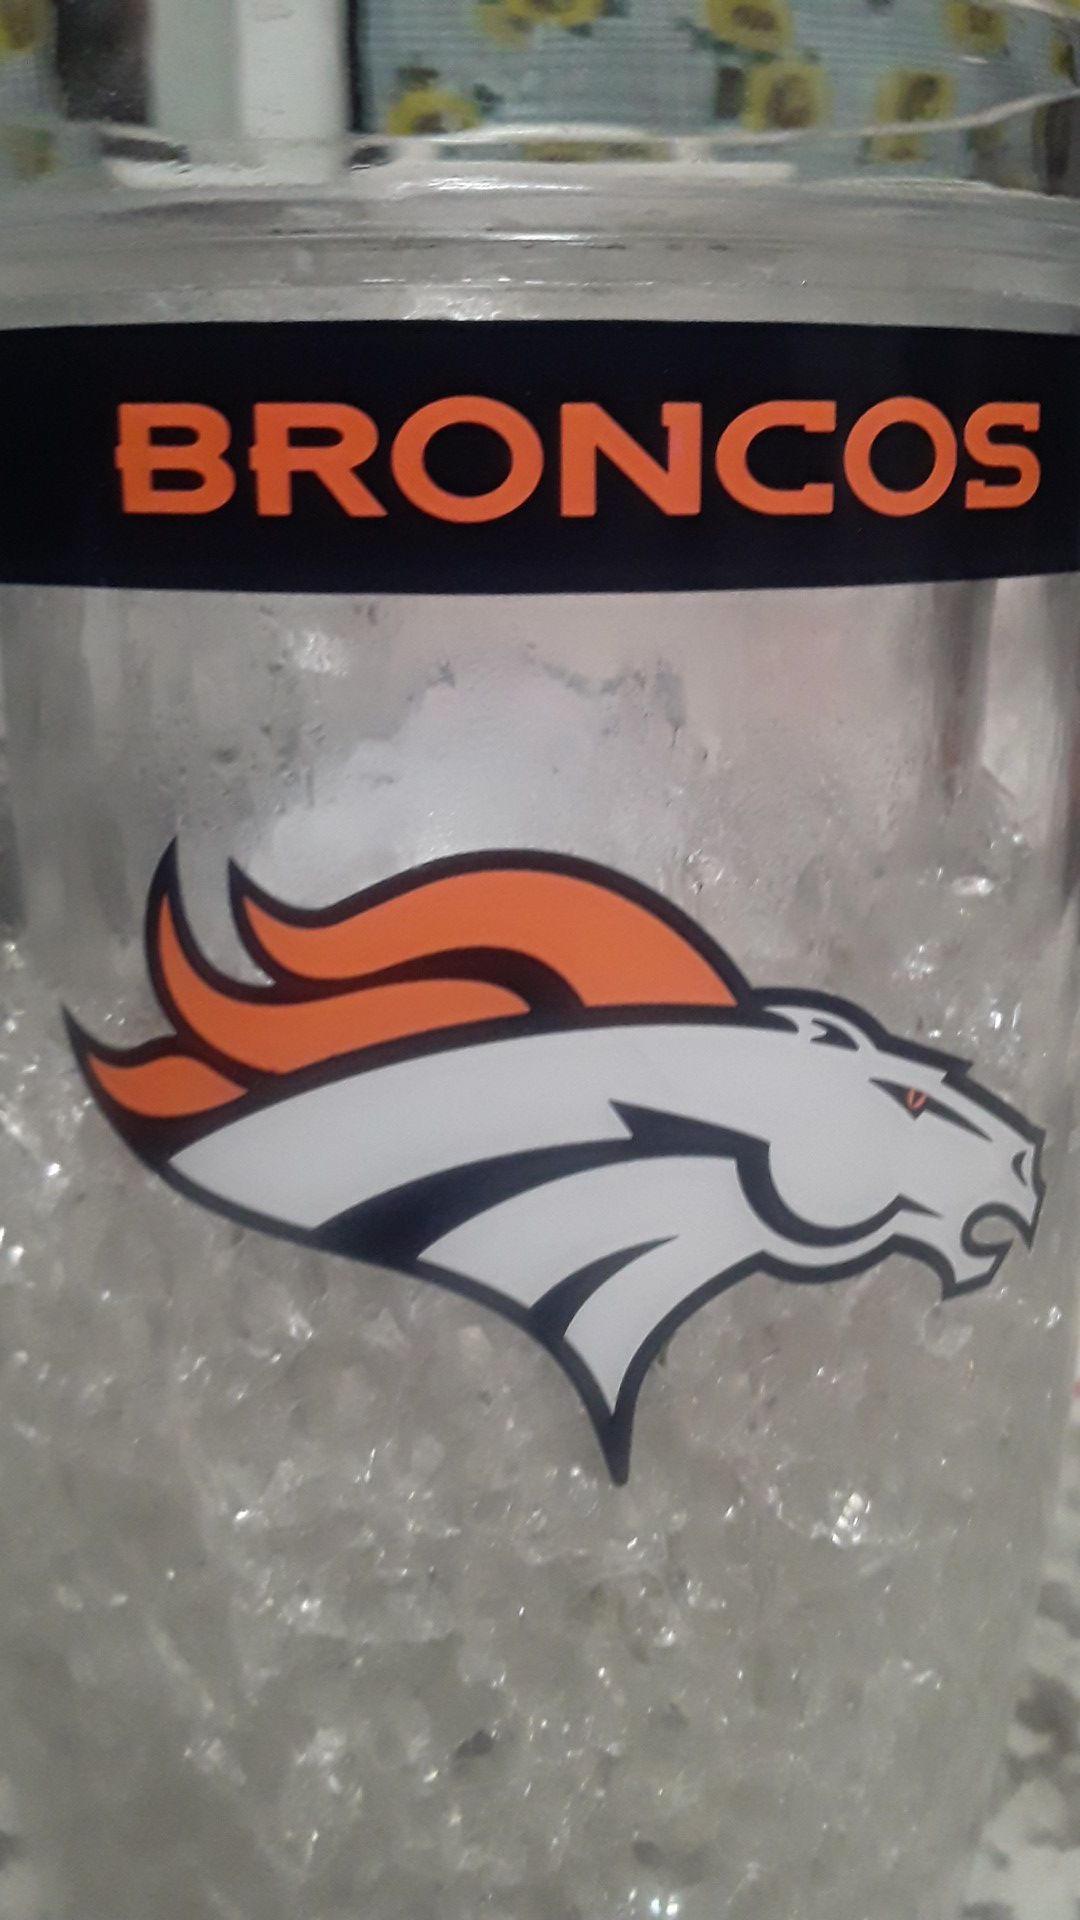 Broncos beer cup